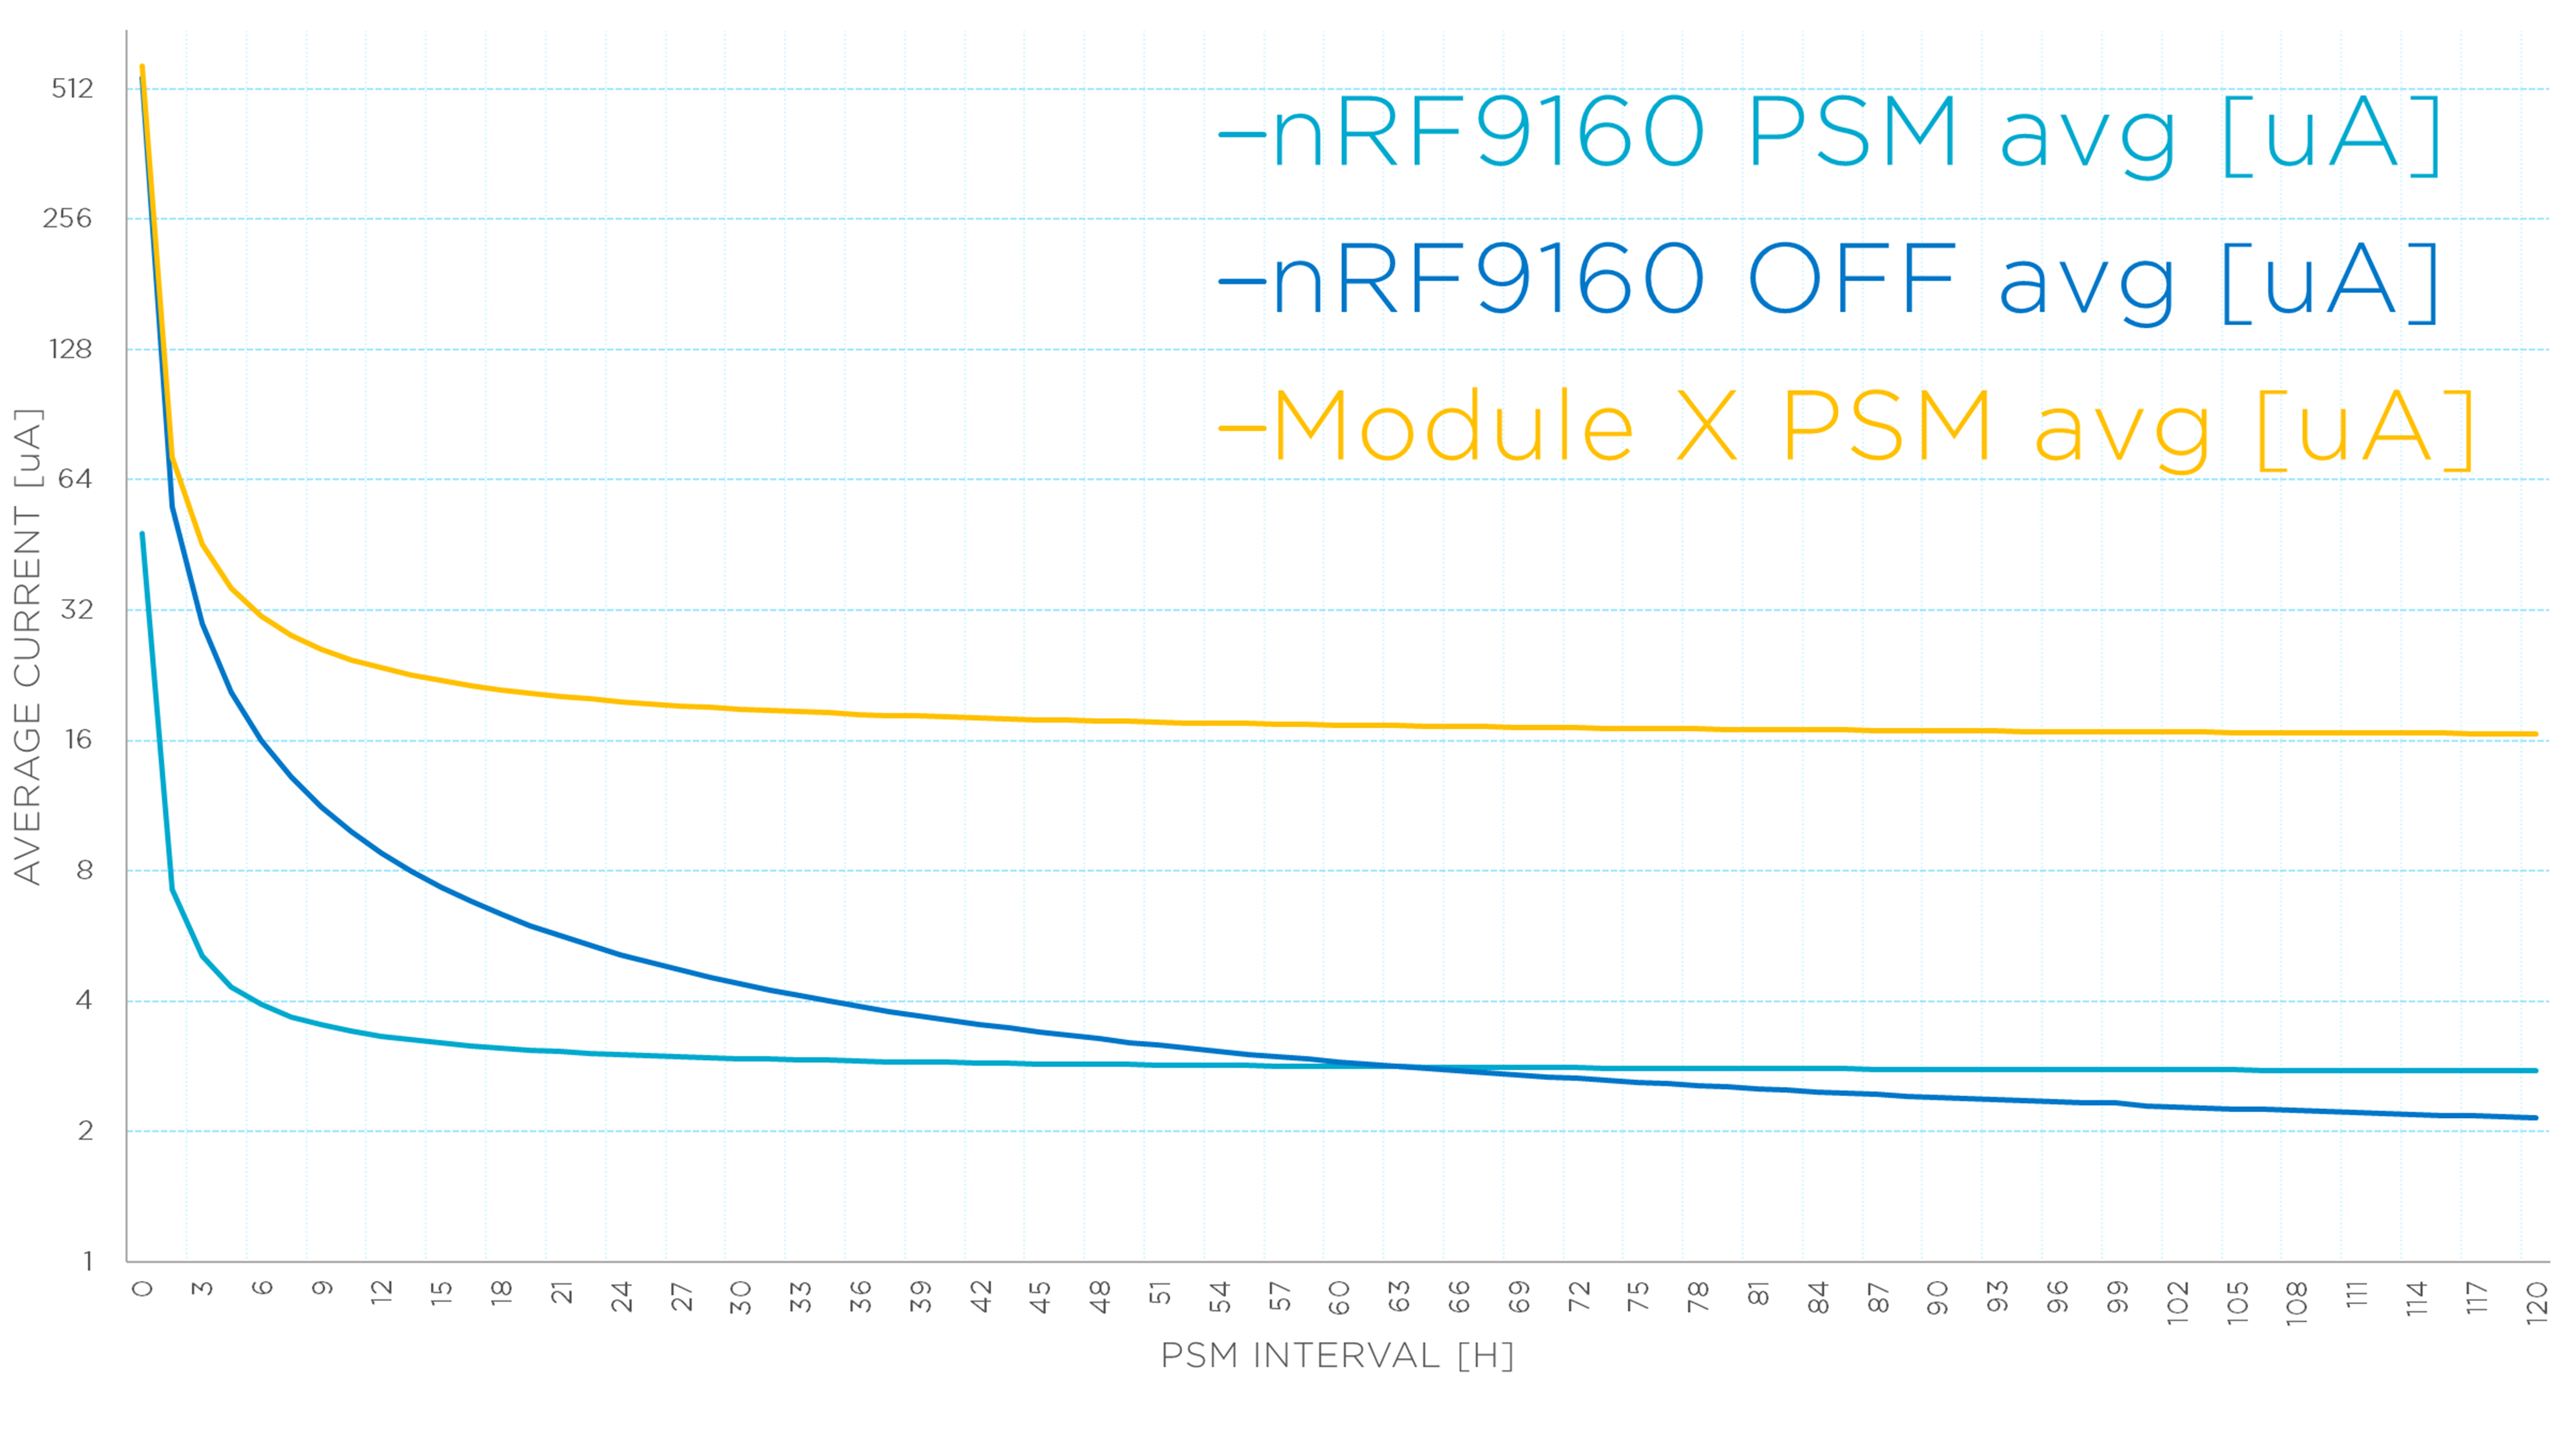 nrf9160 vs module x